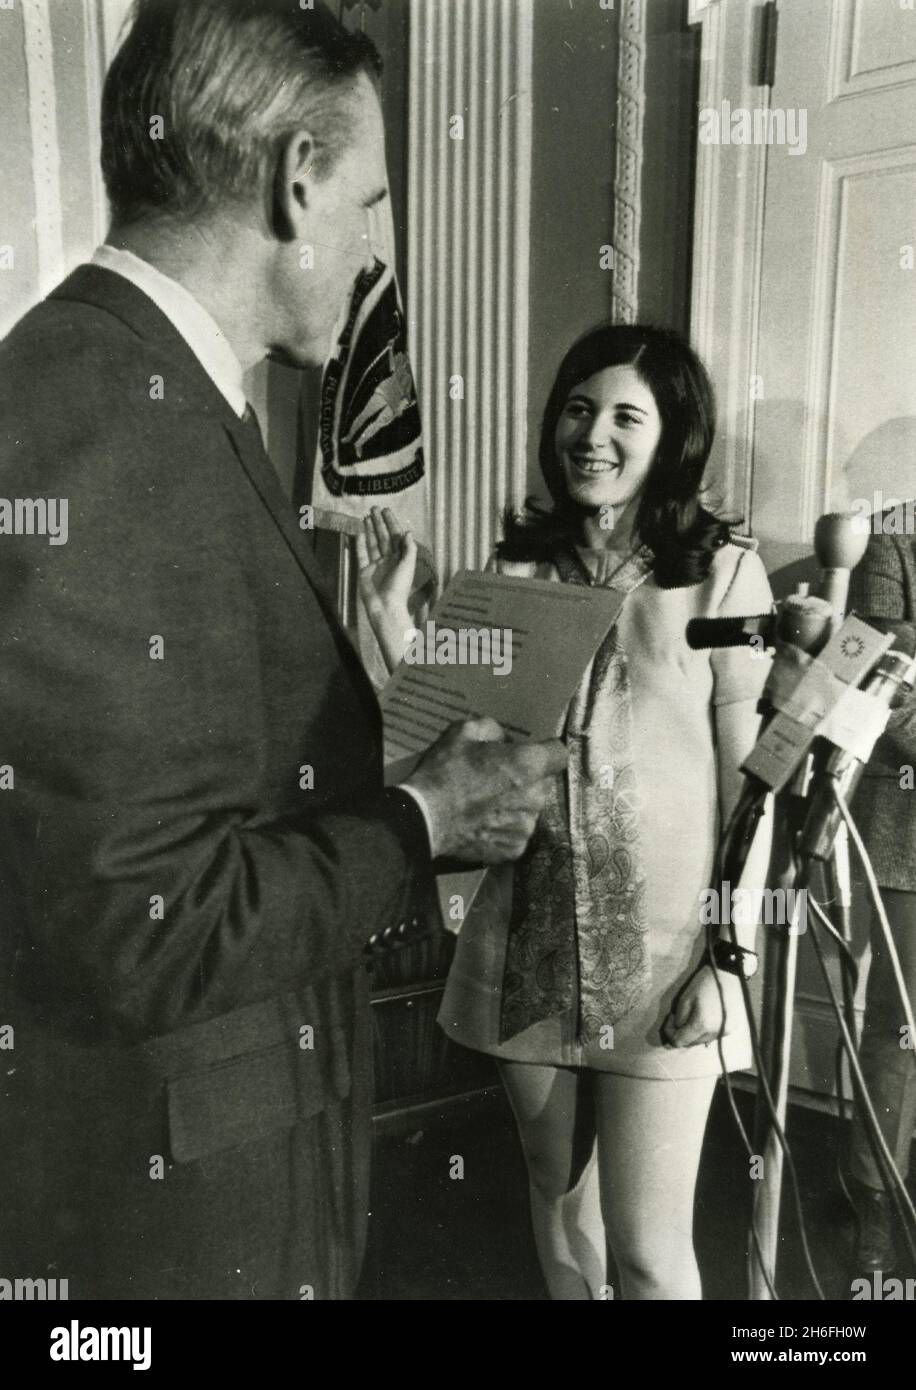 El gobernador DE Massachusetts FRANCIS Sargent se jura en Cynthia Olken, joven fideicomisario de la universidad estatal, USA 1969 Foto de stock